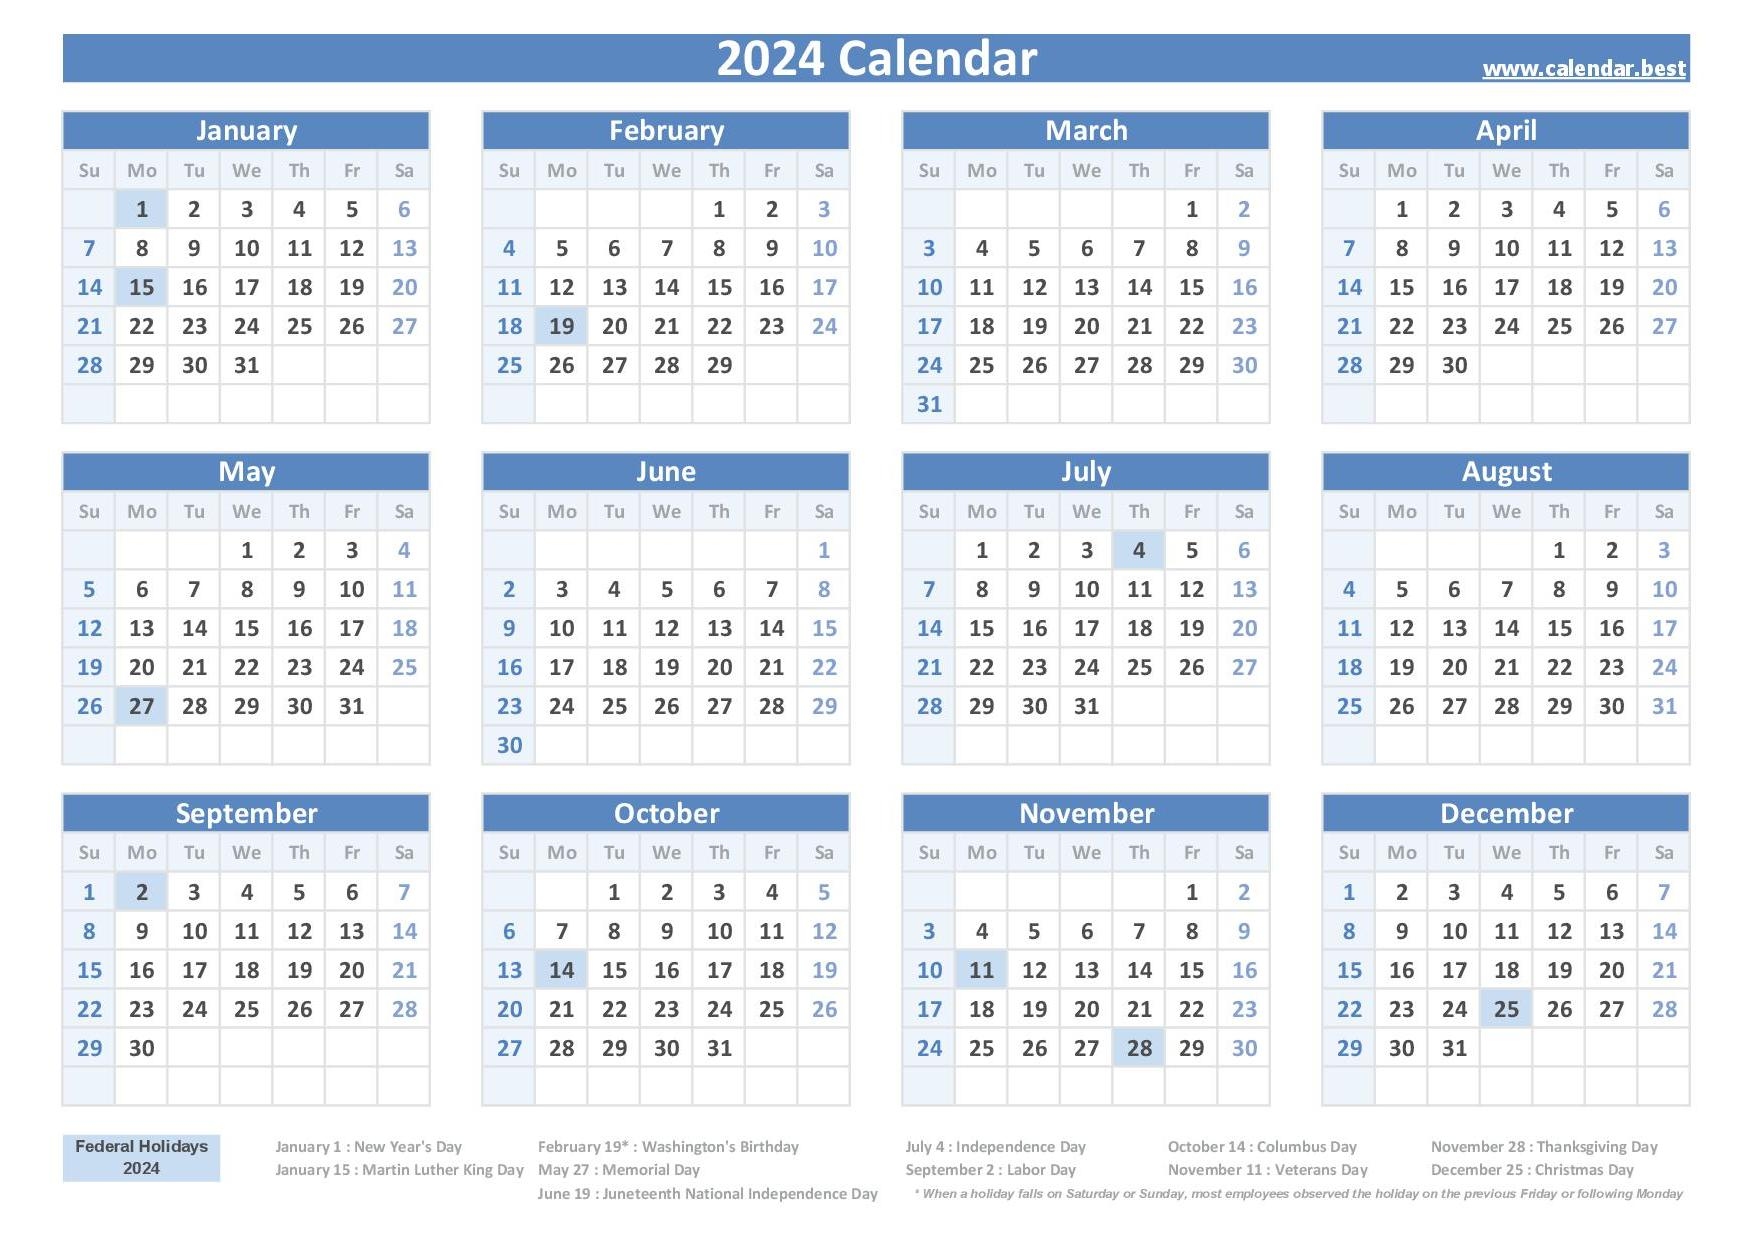 2024 Us Federal Holiday Calendar Printable Bill Marjie - Free Printable 2024 Calendar Template With Holidays